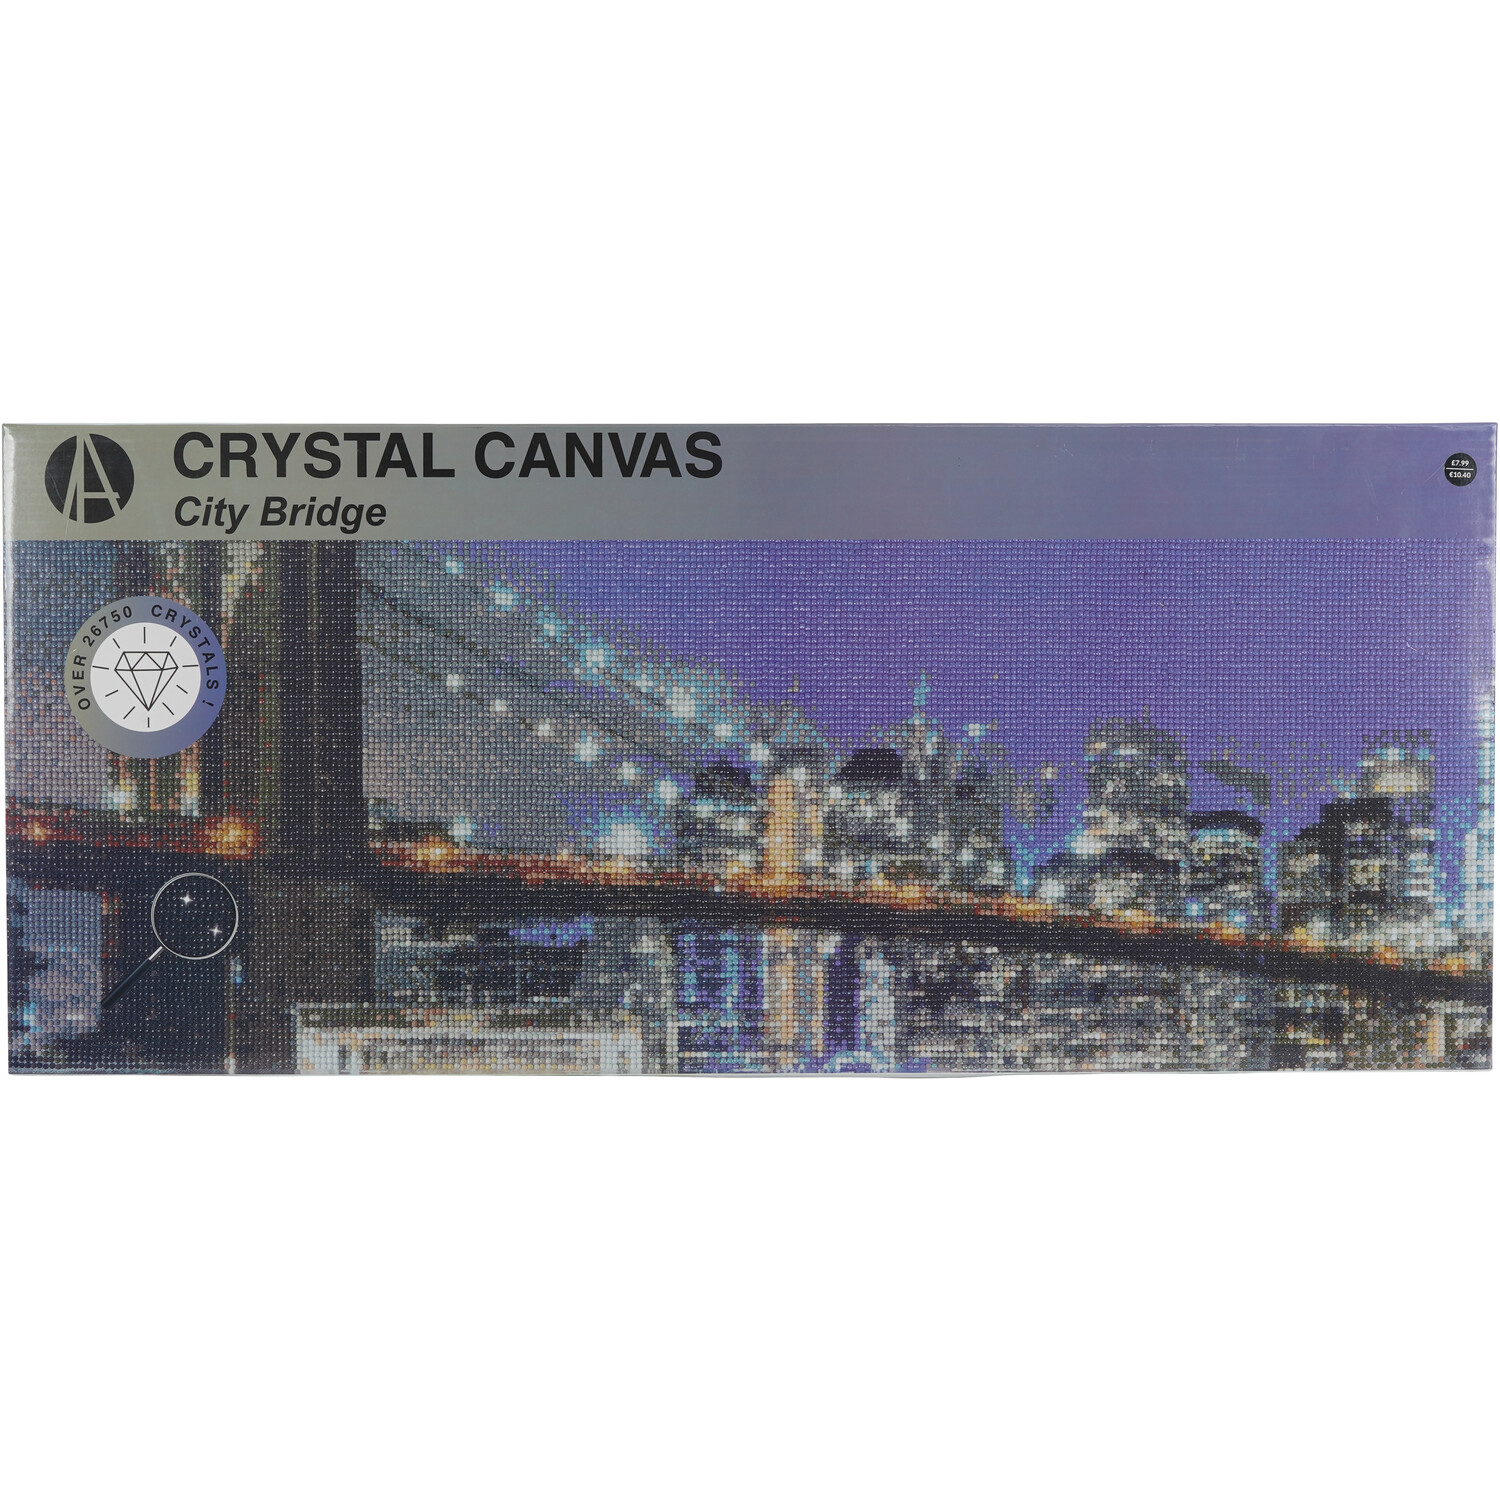 Crystal Canvas Trevi Fountain or City Bridge Image 4